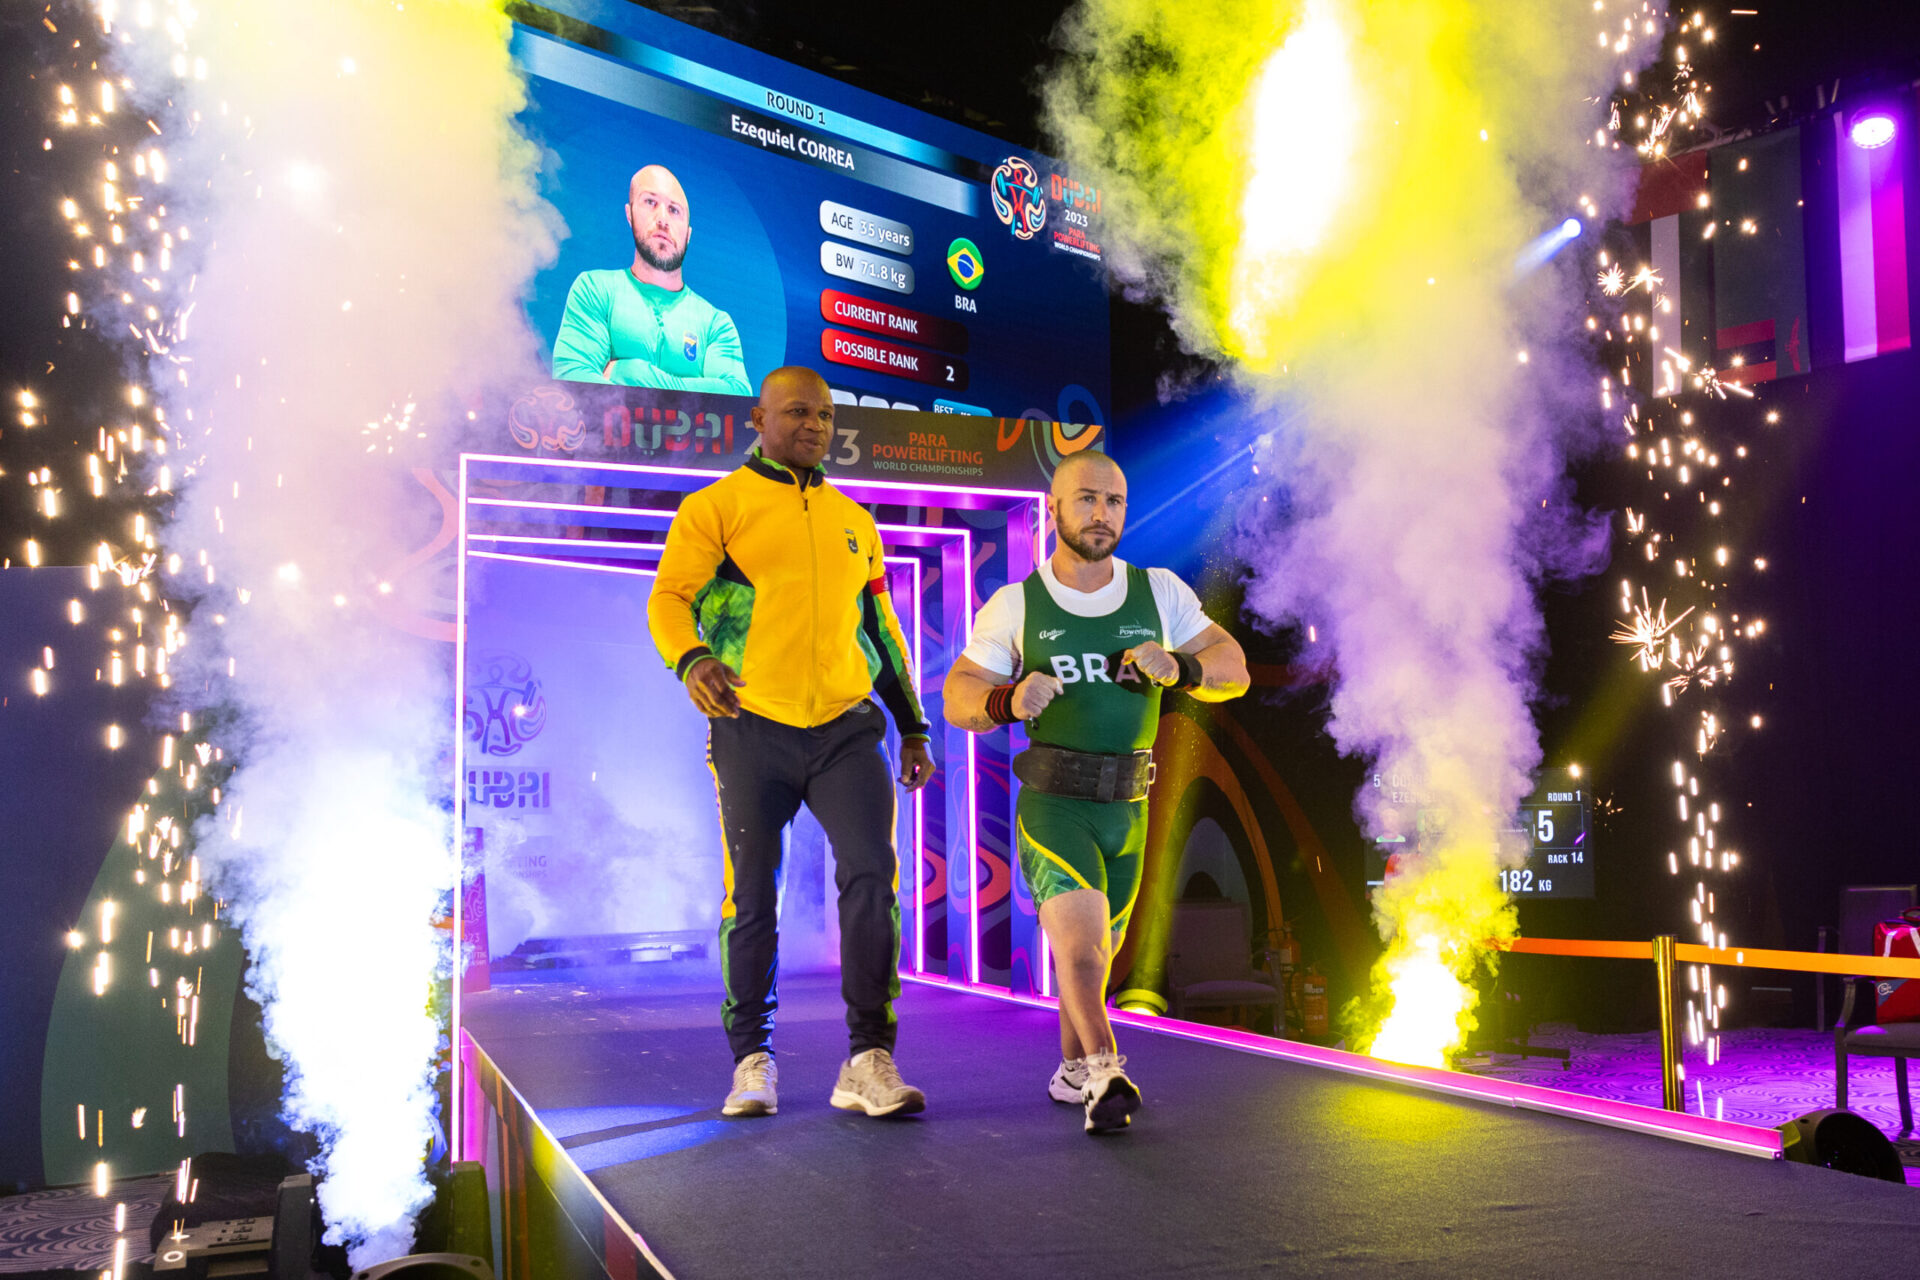 Catarinense bate recorde brasileiro no terceiro dia do Campeonato Mundial  de halterofilismo em Dubai - CPB